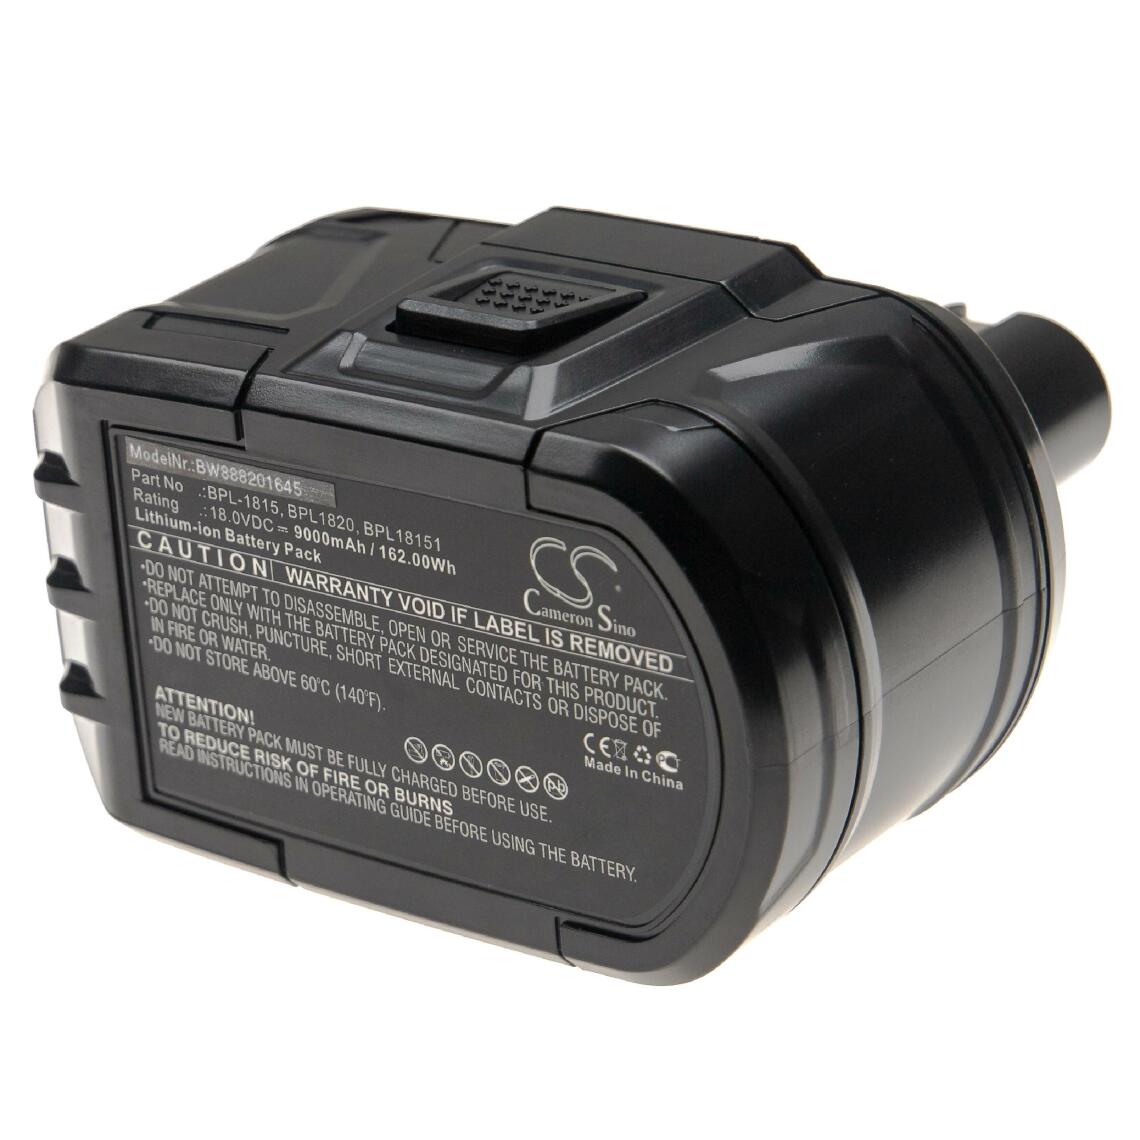 Vhbw - vhbw Batterie compatible avec Ryobi LCD18022B, LCD1802M, LCS-180, LDD-1802, LDD-1802PB, LDD1801PB outil électrique (9000mAh Li-Ion 18V) - Clouterie